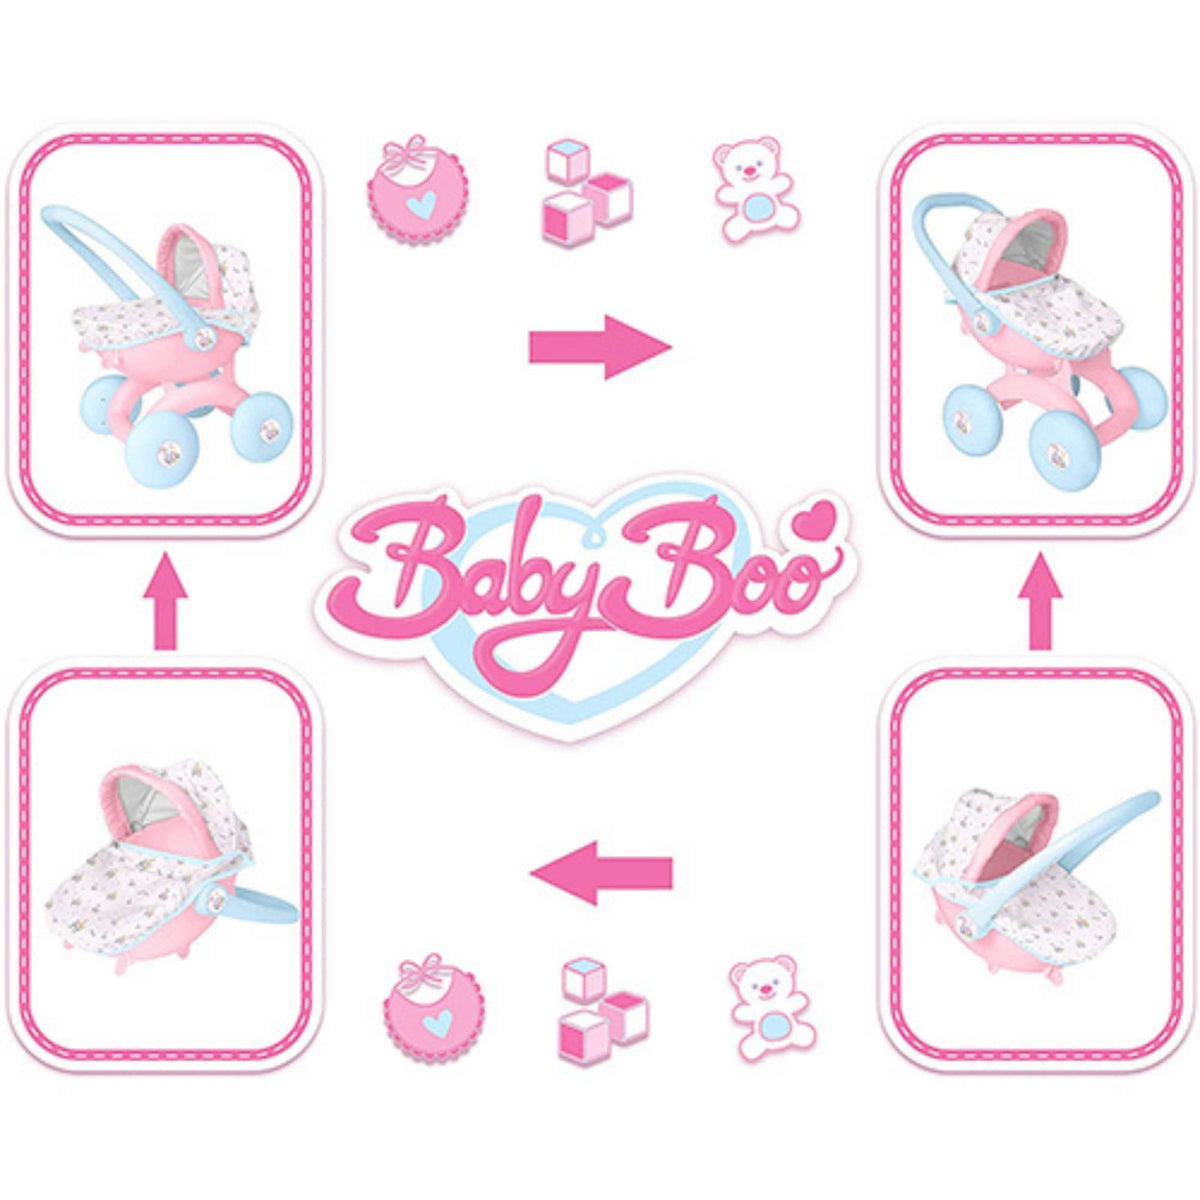 BabyBoo My First 4-IN-1 Interchangeable Dolls Pram